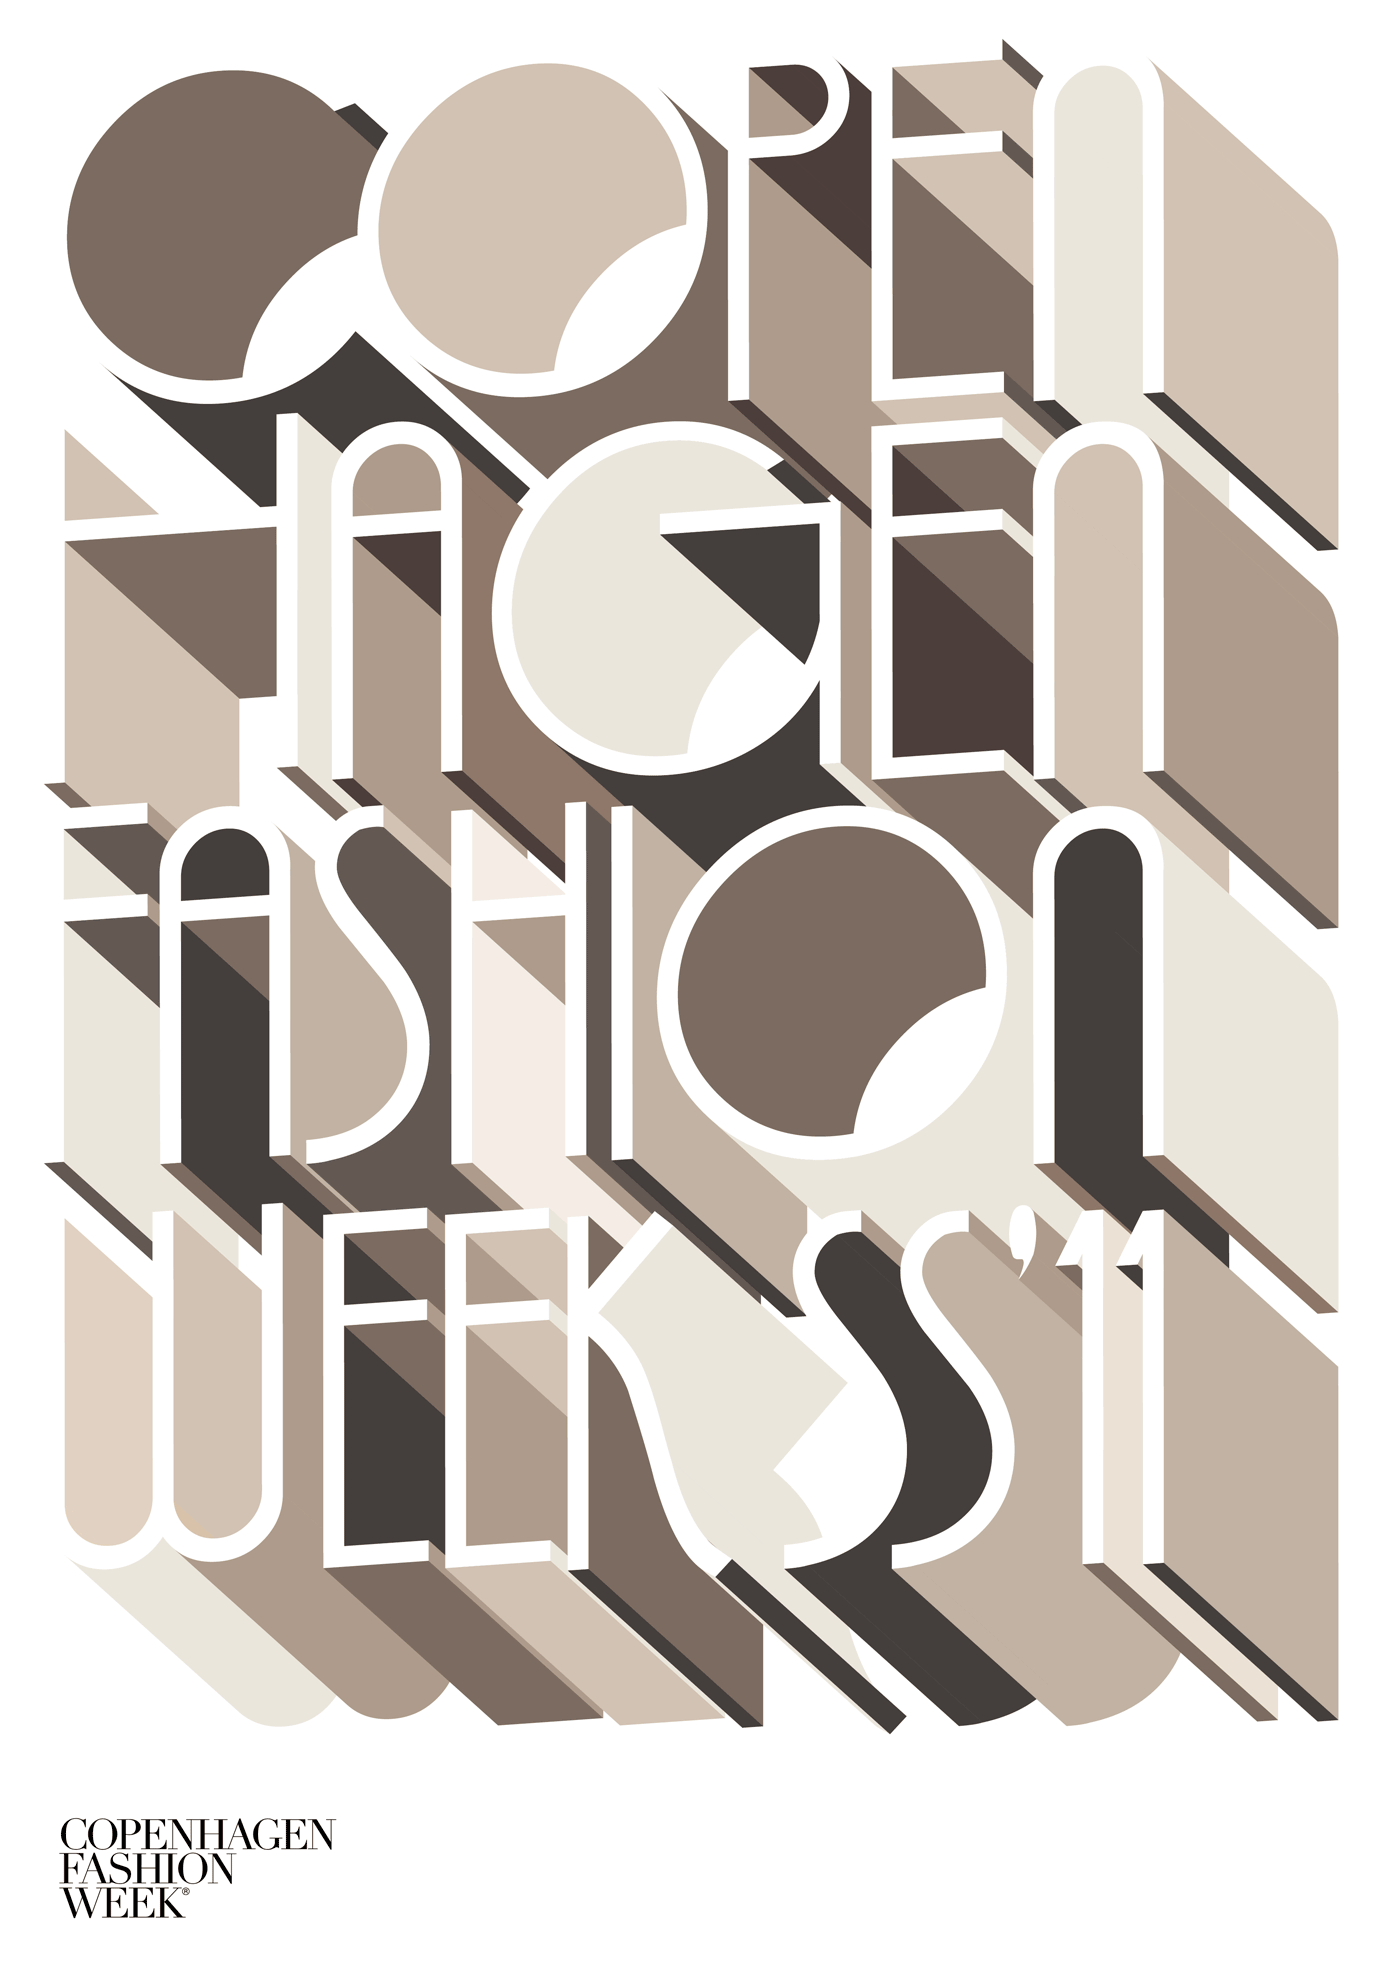 Copenhagen Fashion Week – Concept (proposal) 2011